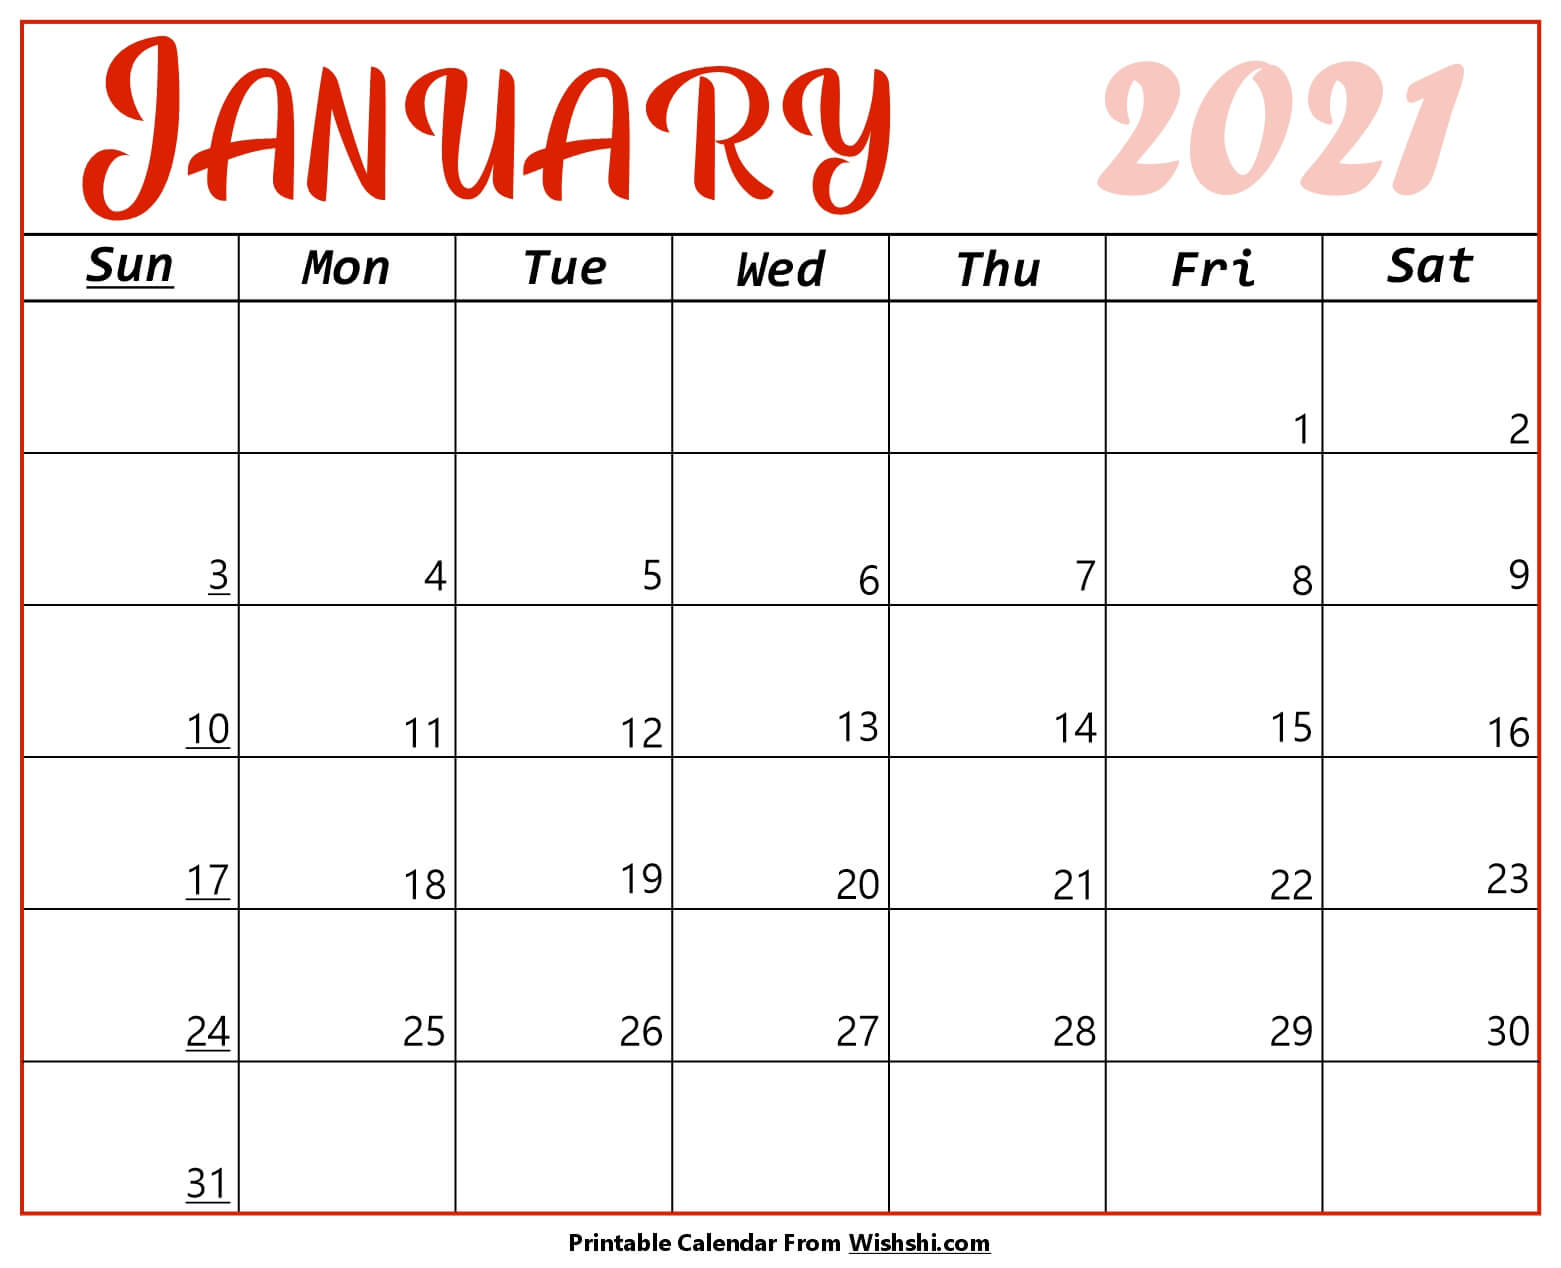 January 2021 Calendar Printable Free Printable Calendars